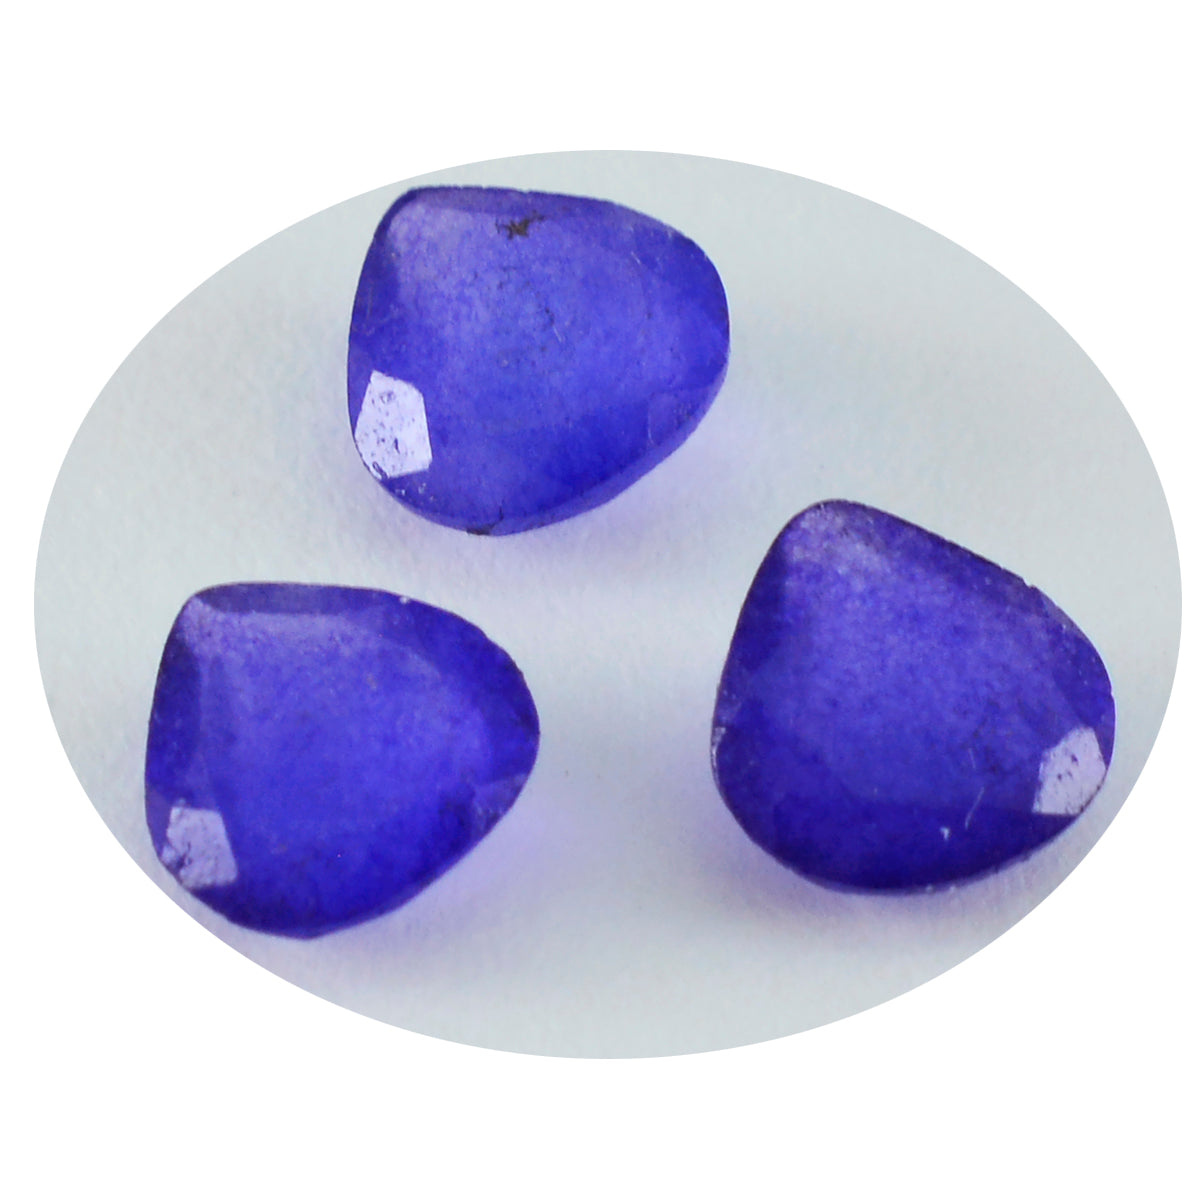 Riyogems 1PC Natural Blue Jasper Faceted 12x12 mm Heart Shape awesome Quality Loose Gem